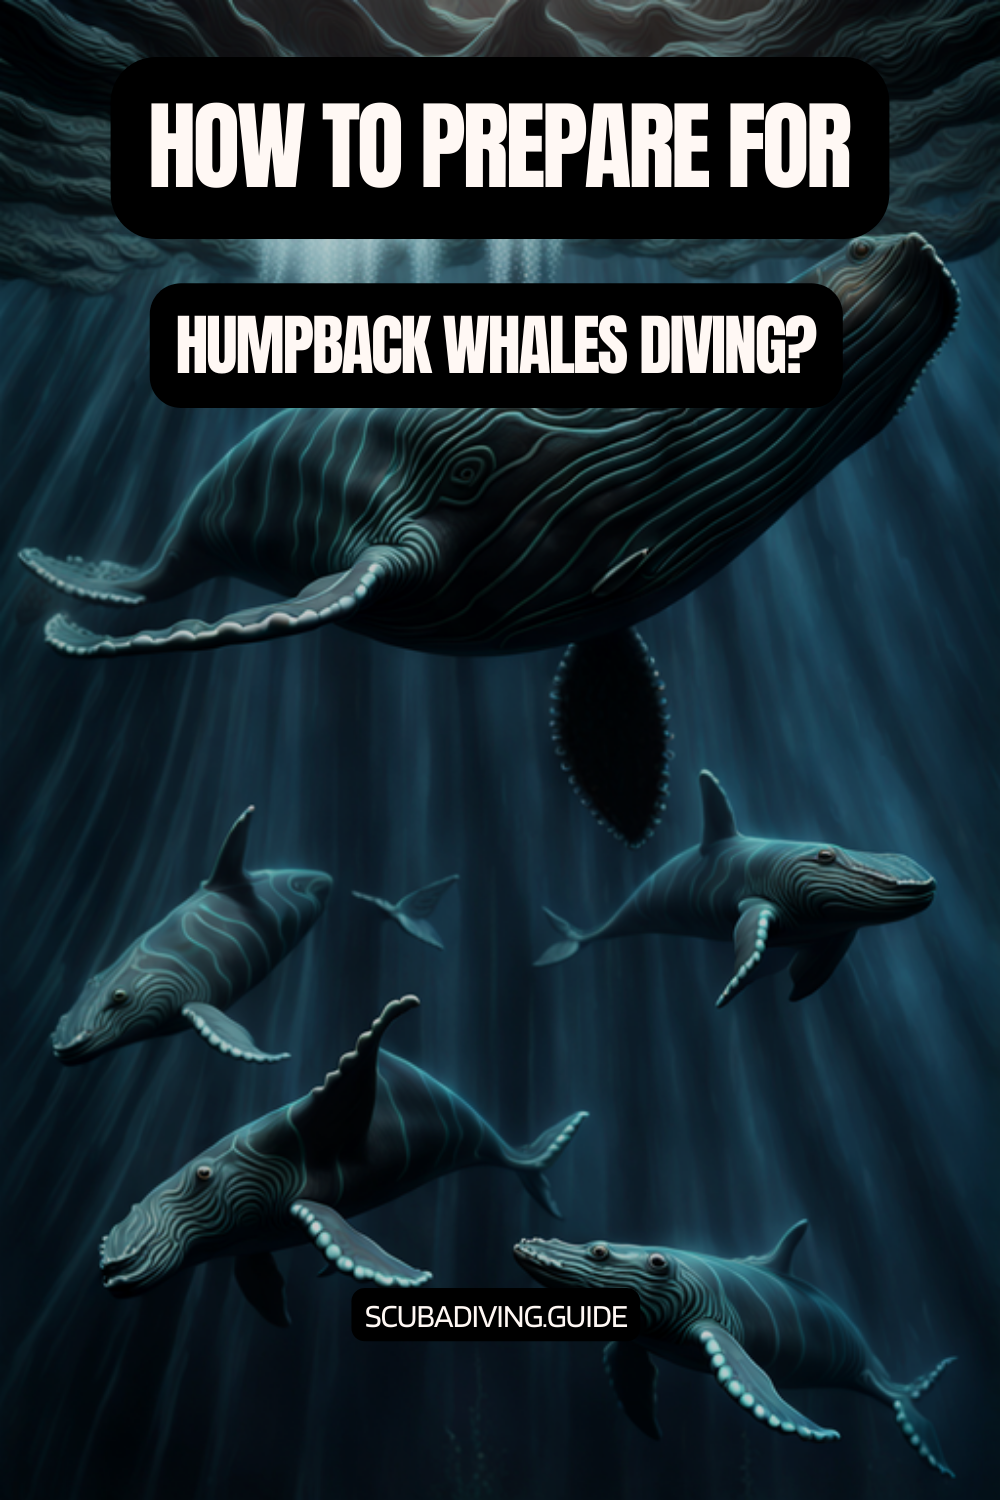 Preparing for a Humpback Whales Dive